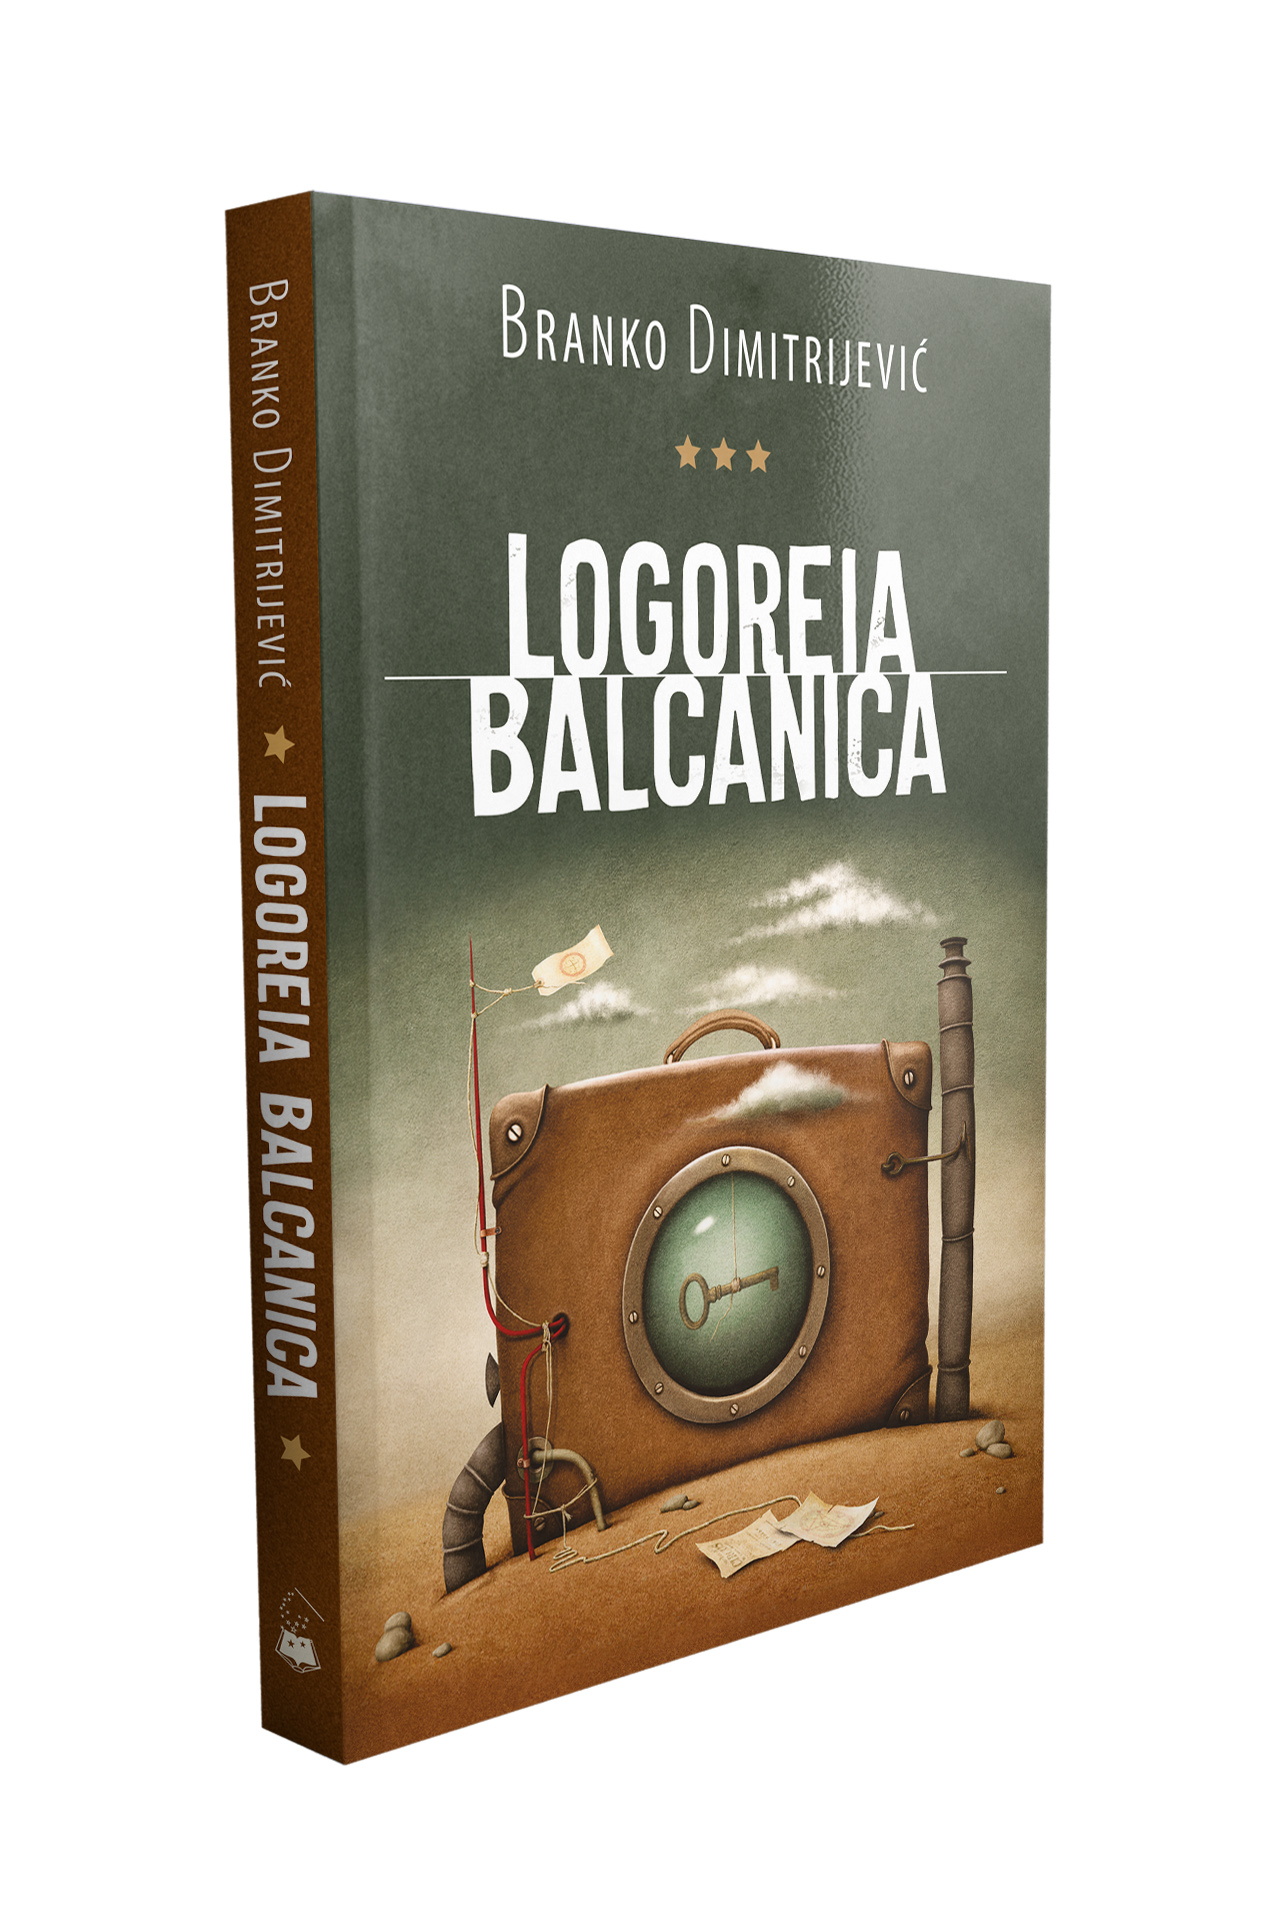 Promocija romana - LOGOREIA BALCANICA